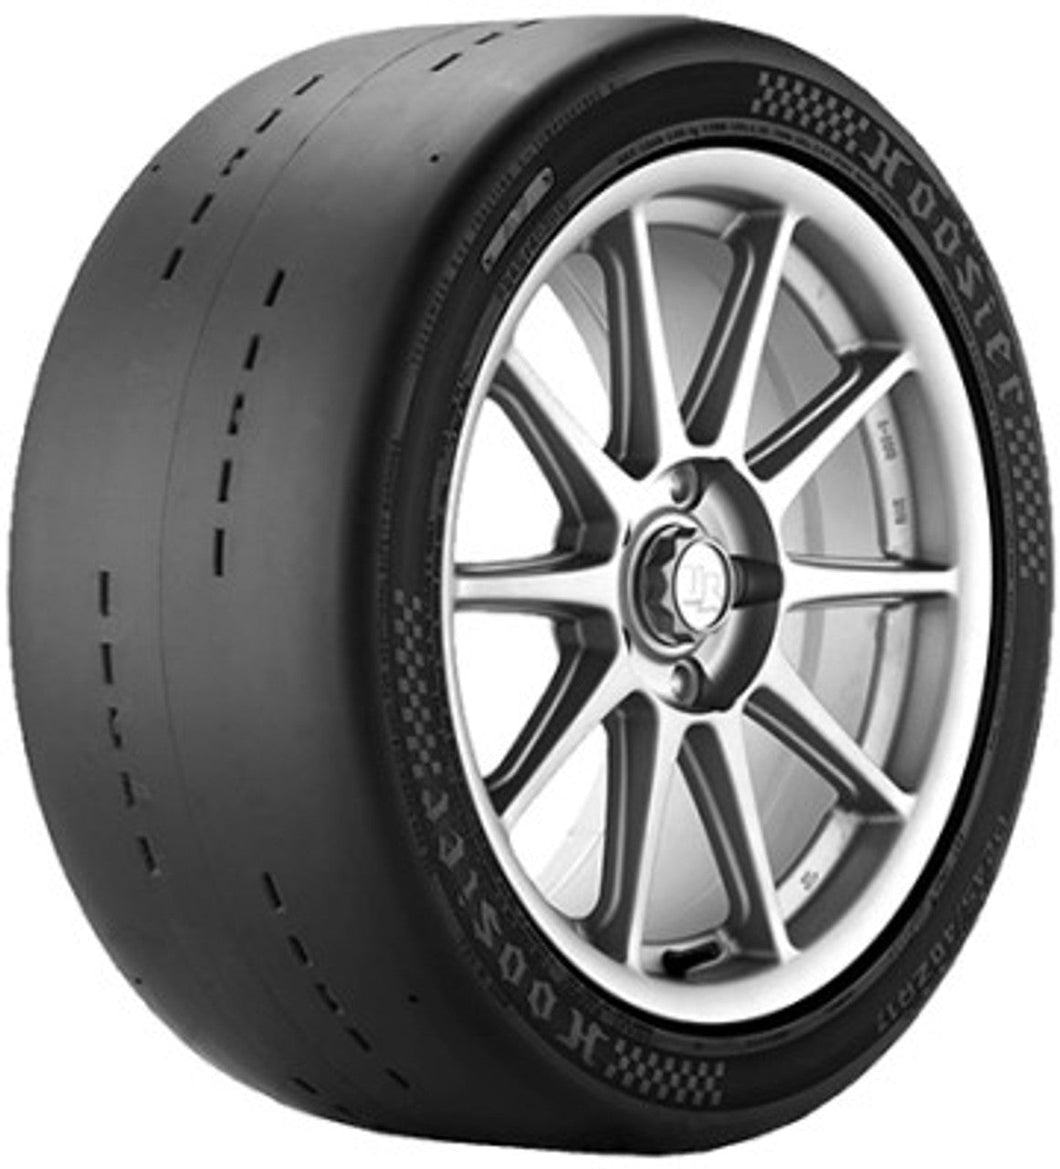 285/30 ZR18 Hoosier Tire Slick D.O.T Neumático